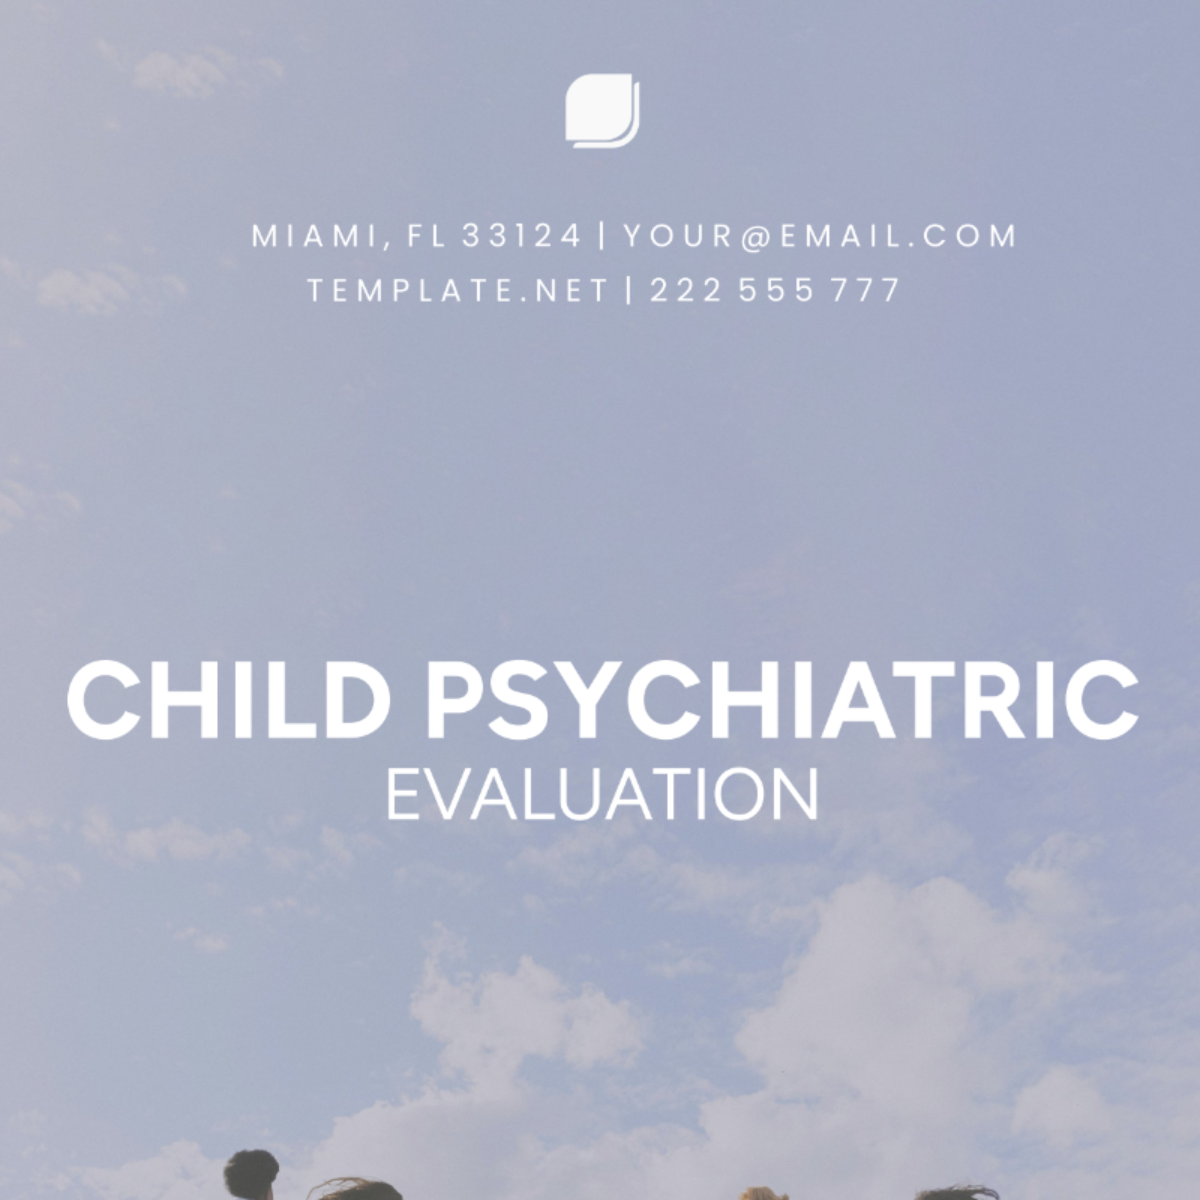 Child Psychiatric Evaluation Template